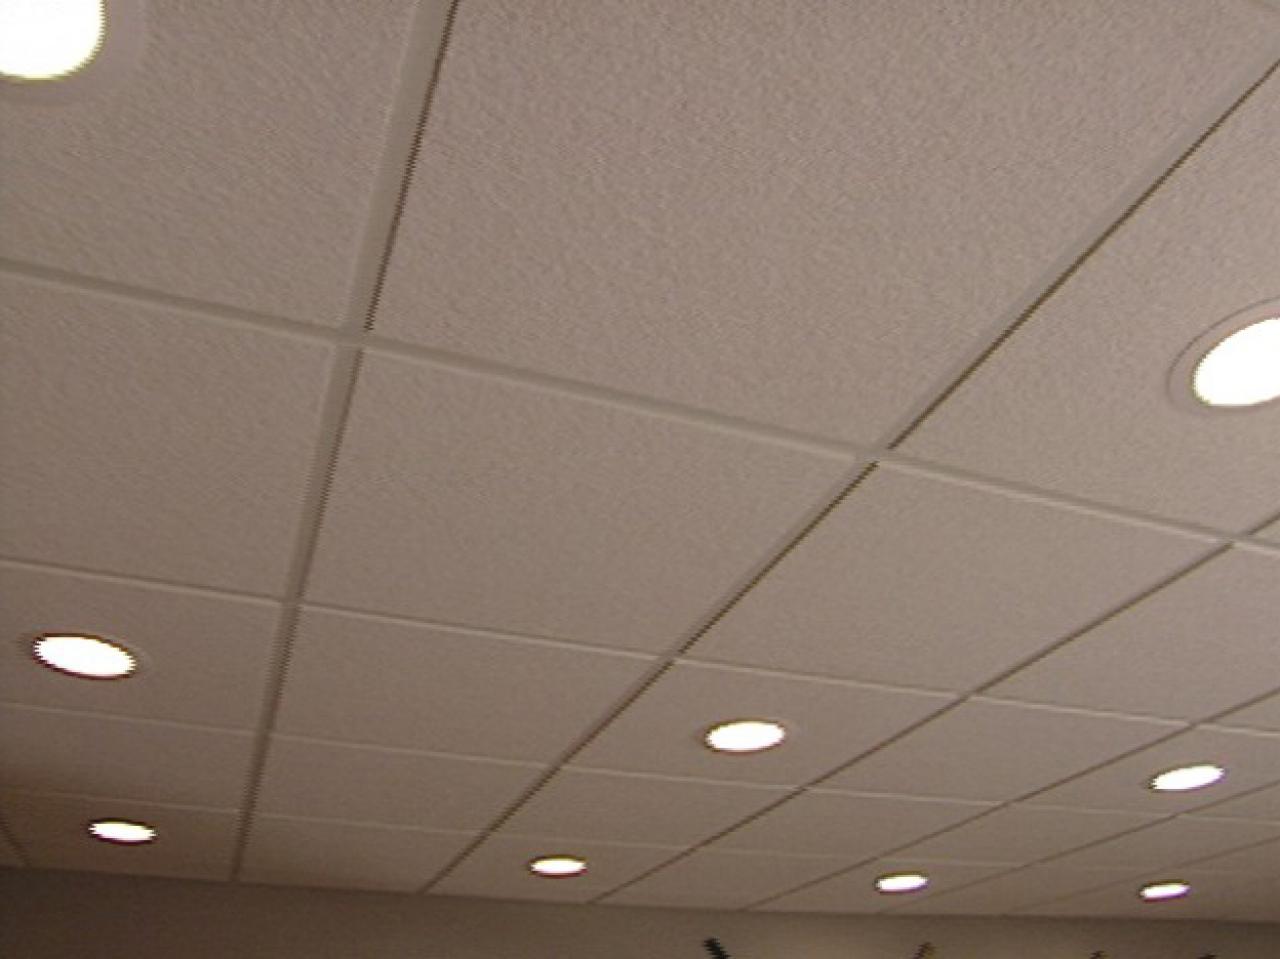 Suspended Ceiling Light Grid : Suspended ceiling grid light panels